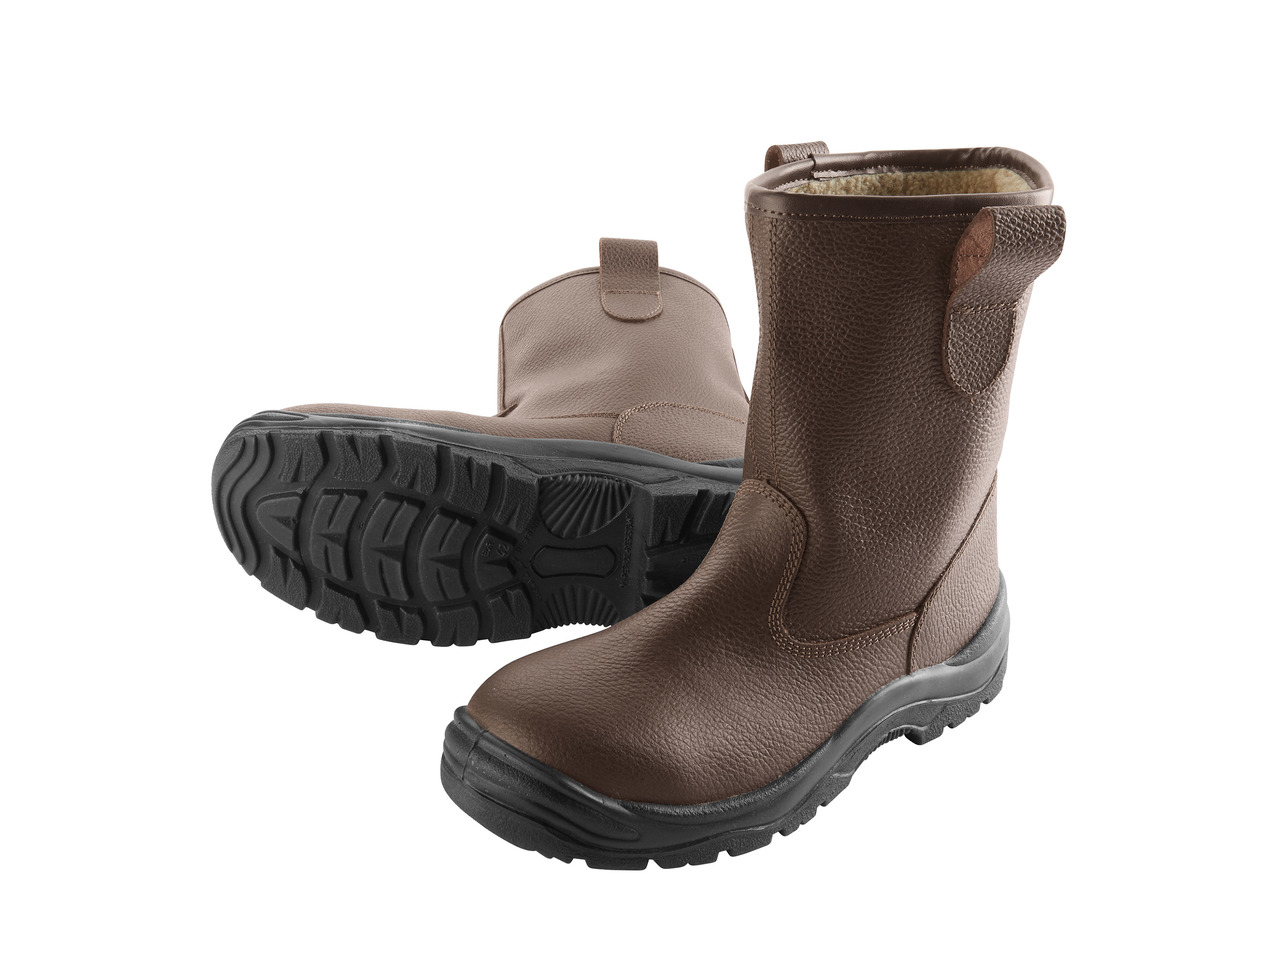 Powerfix Profi Leather Safety Boots1